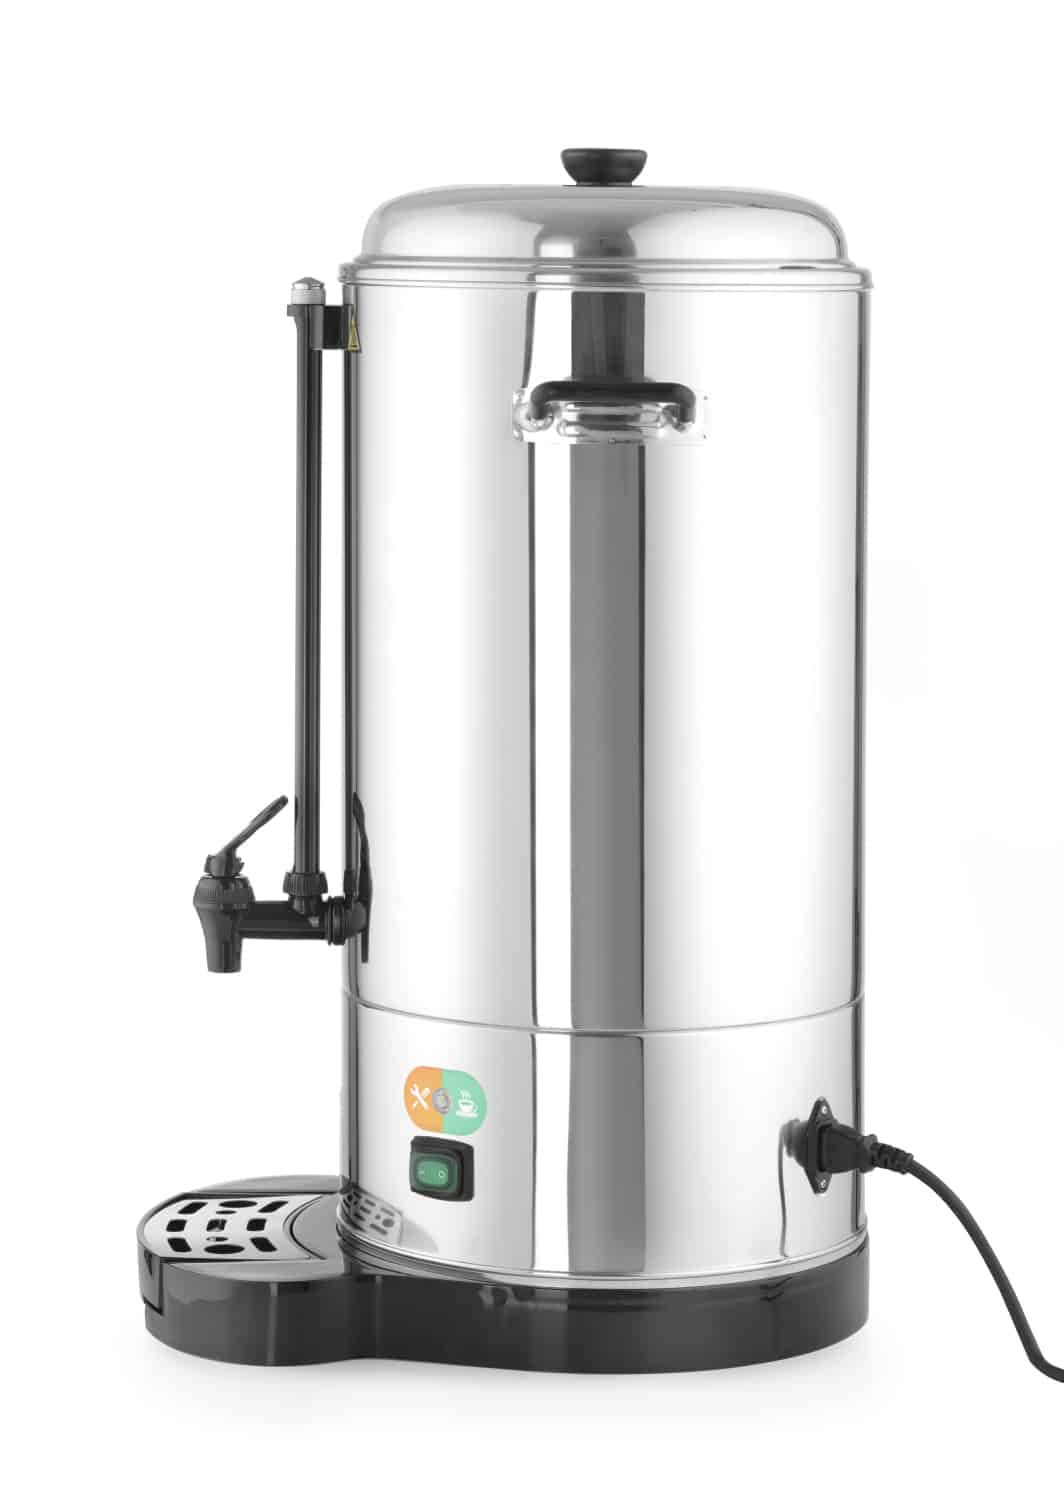 Rund-Filter-Kaffeemaschine Kaffeeautomat 15 Liter Hendi Gastro Profi NEU 